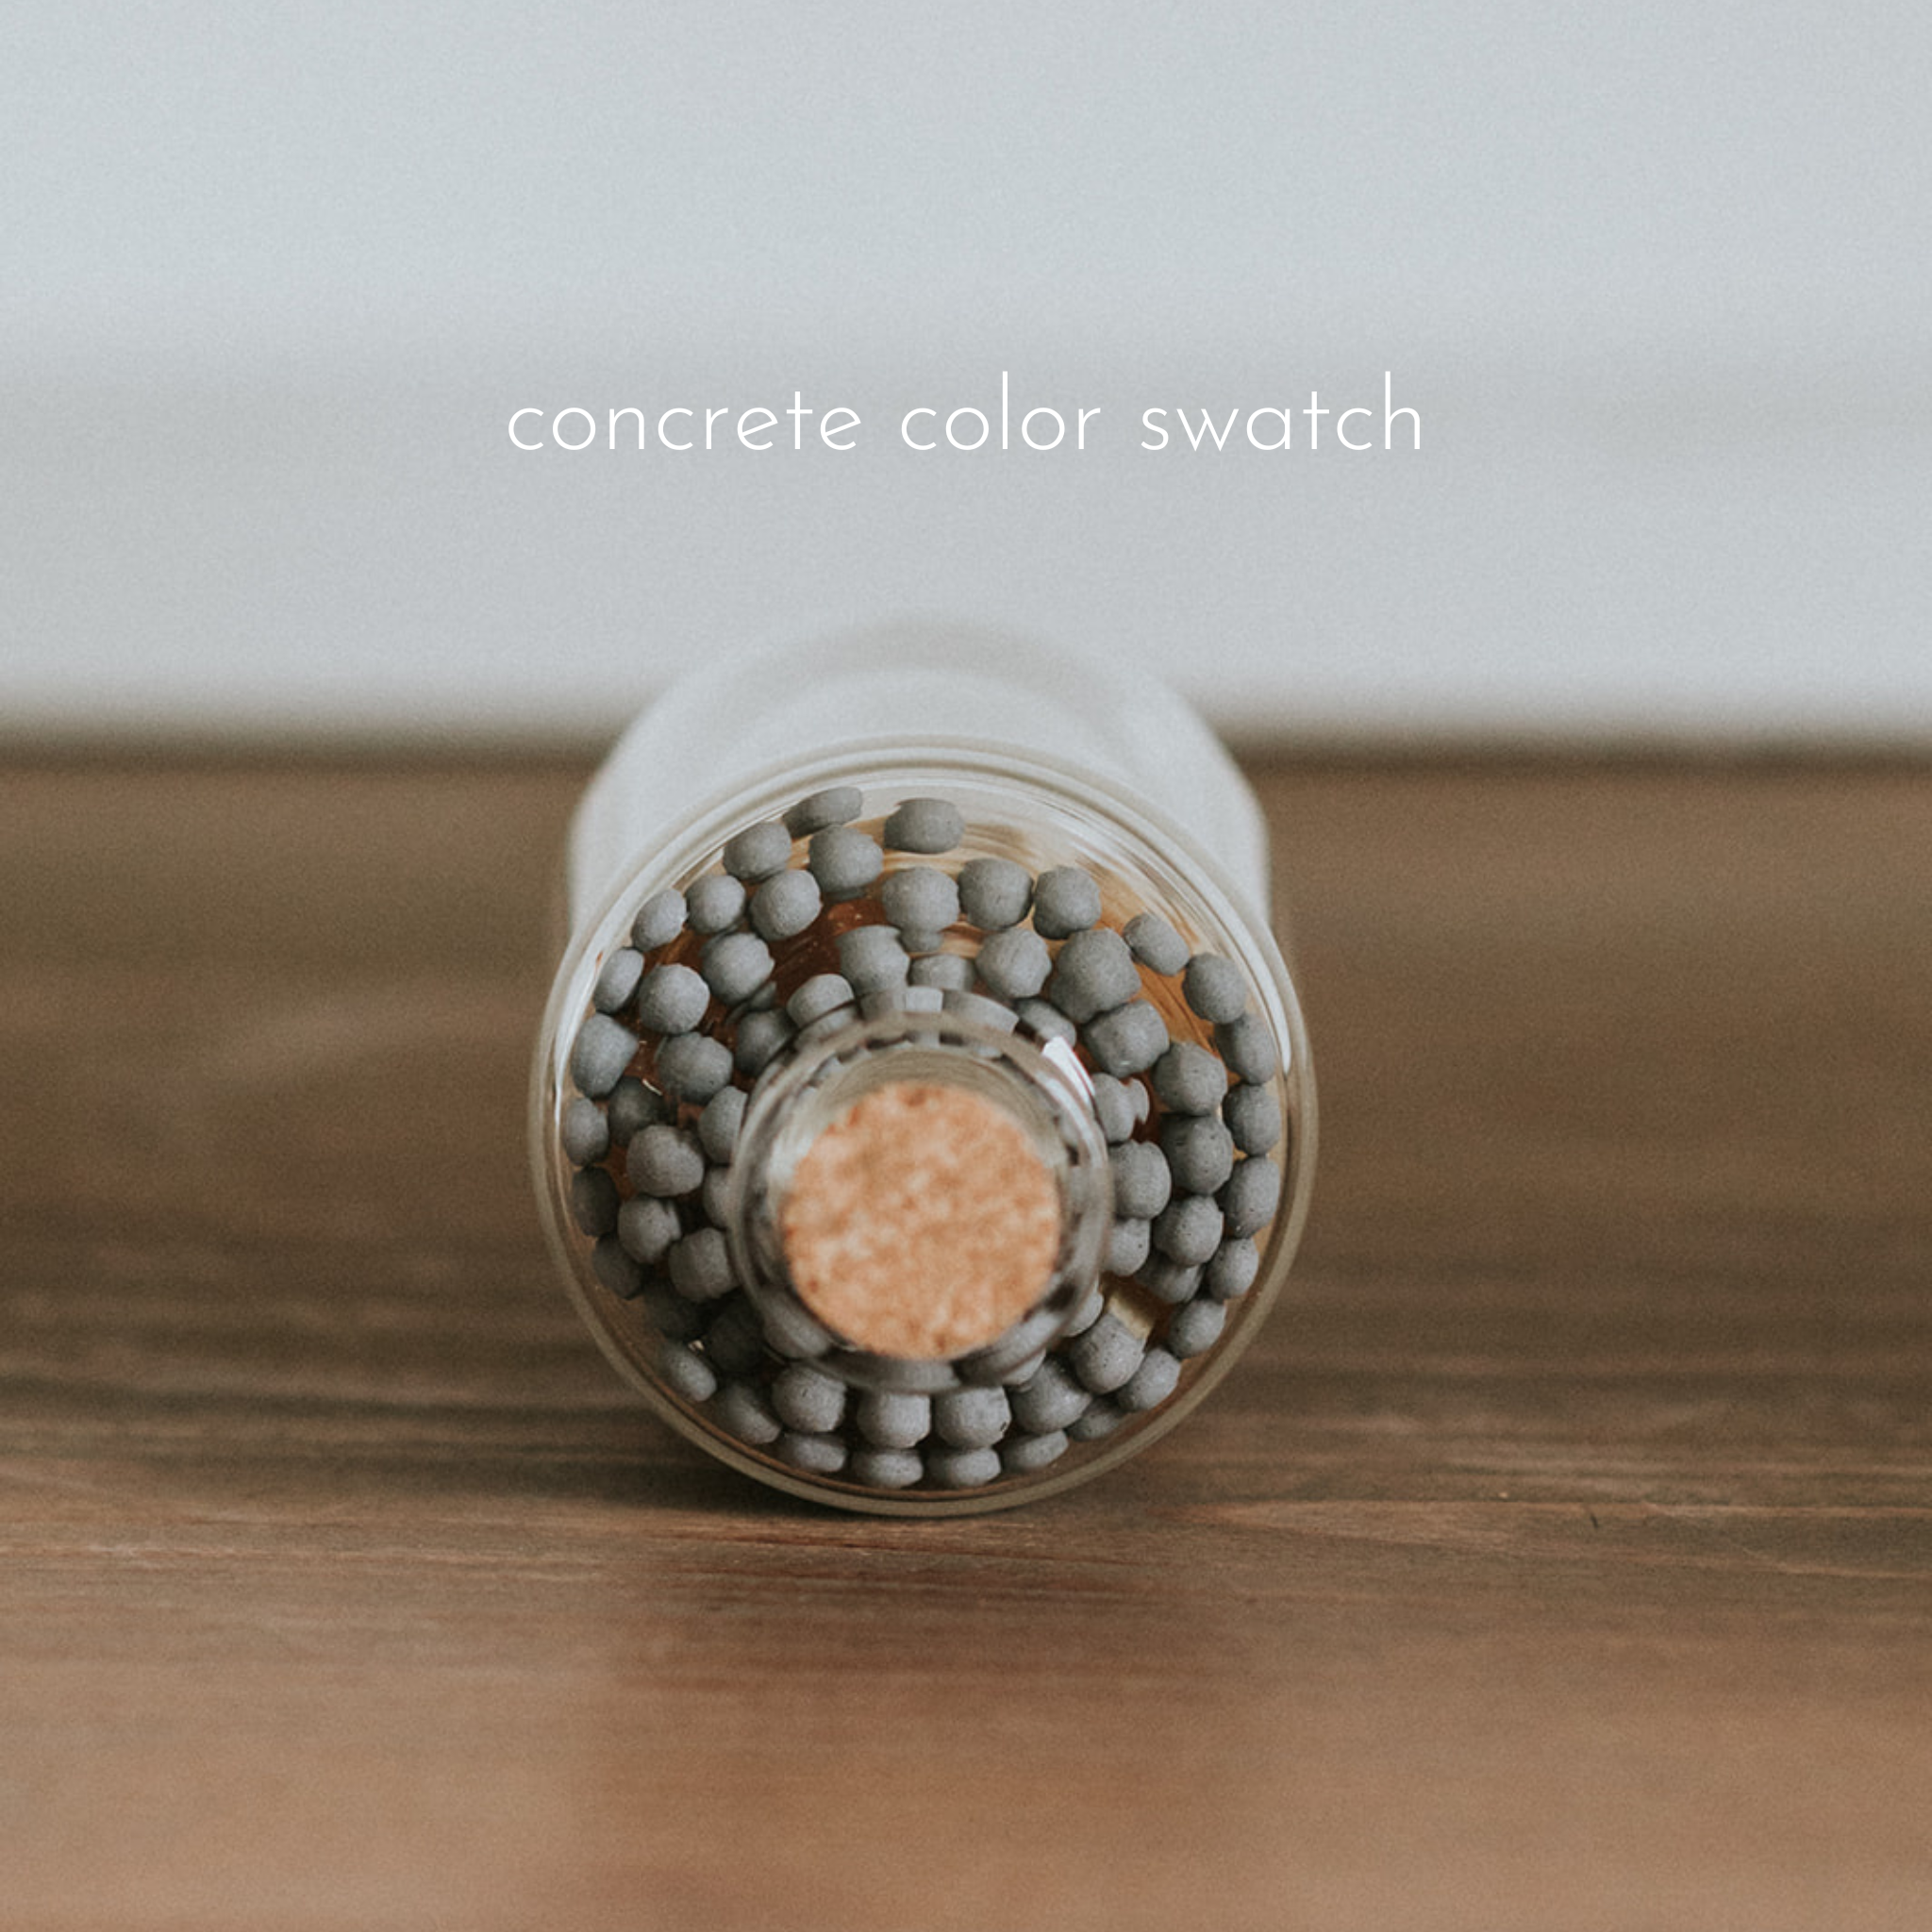 Apothecary Matches: Color Tip Jar Matchsticks: Monochrome